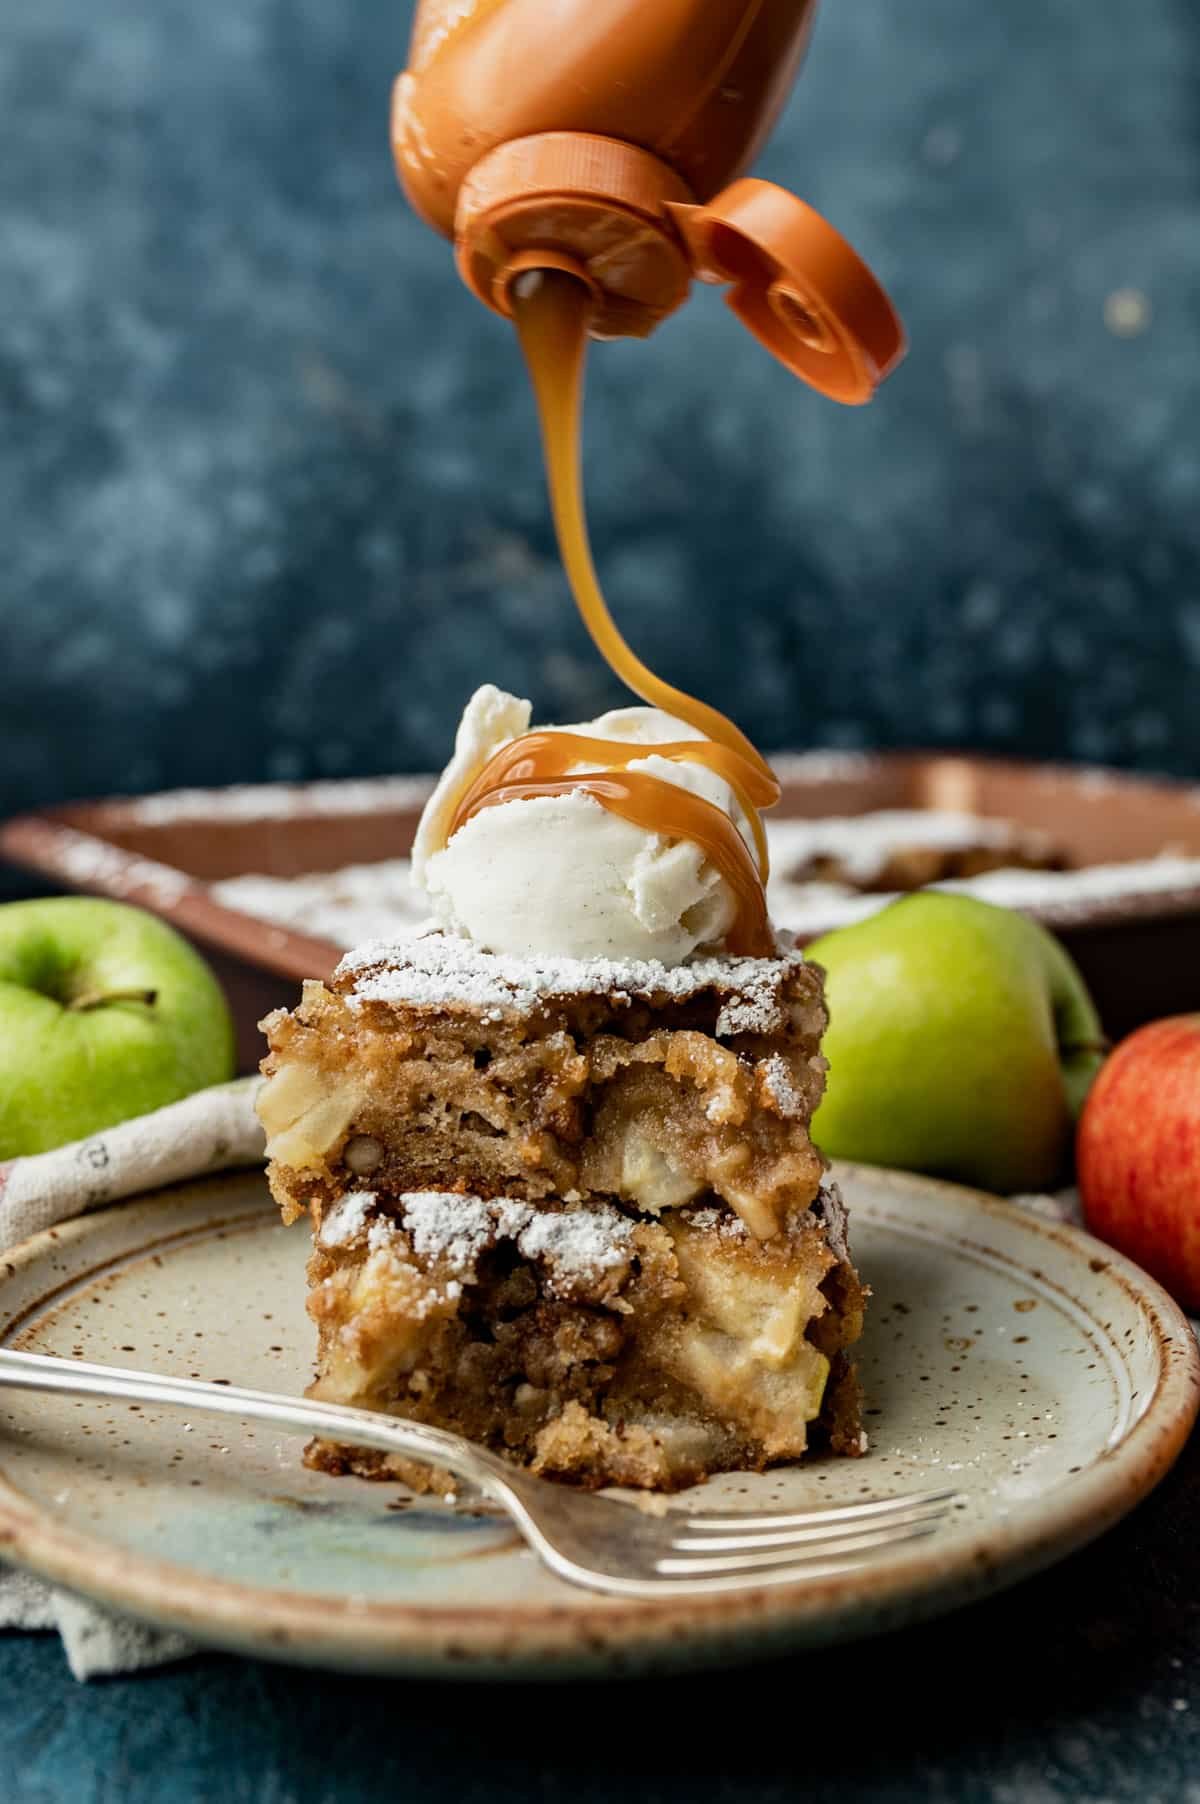 caramel drizzling over apple walnut cake